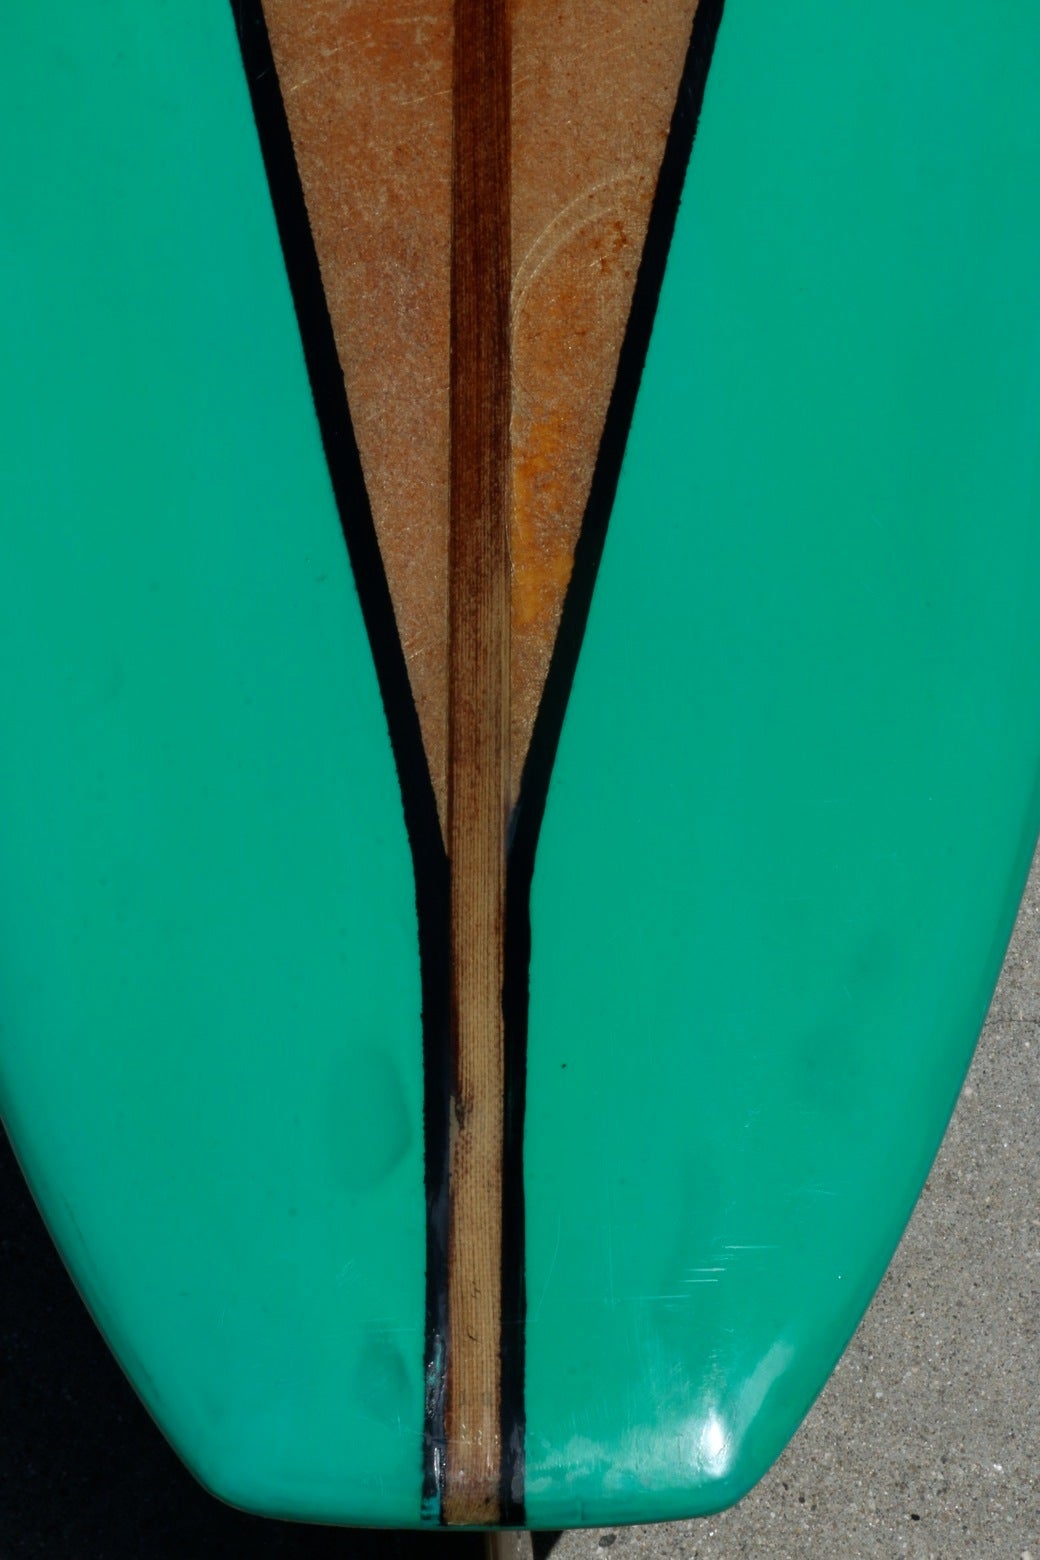 Fiberglass Early 1960s 'Surf Rider Standard' Surfboard, Santa Ana, California